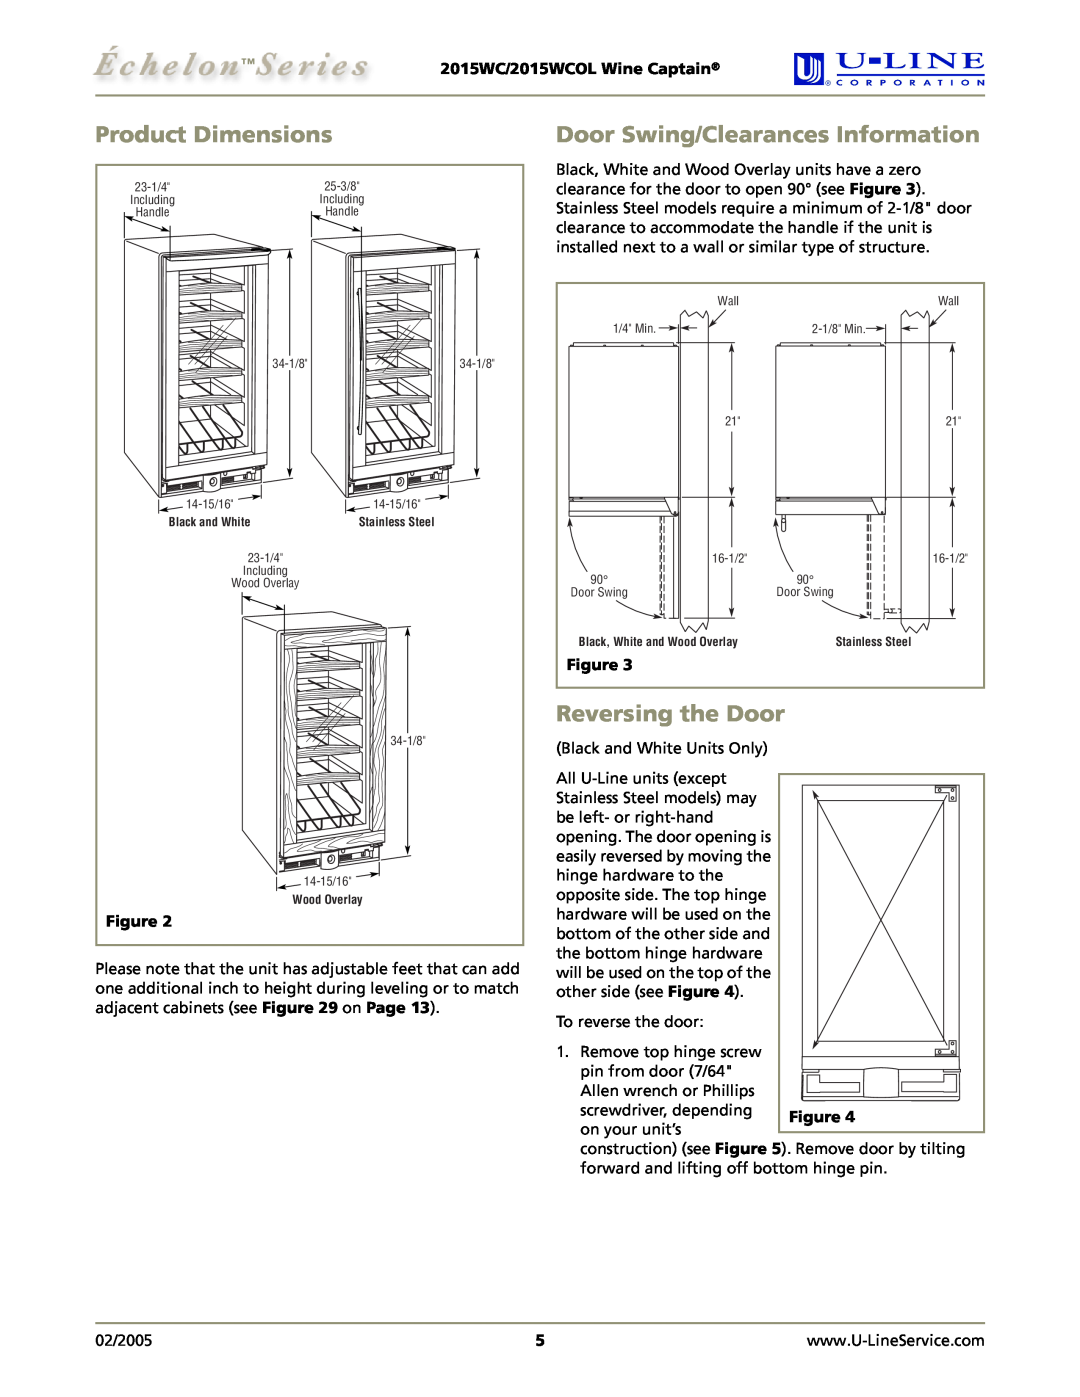 U-Line manual Product Dimensions, Door Swing/Clearances Information, Reversing the Door, 2015WC/2015WCOL Wine Captain 